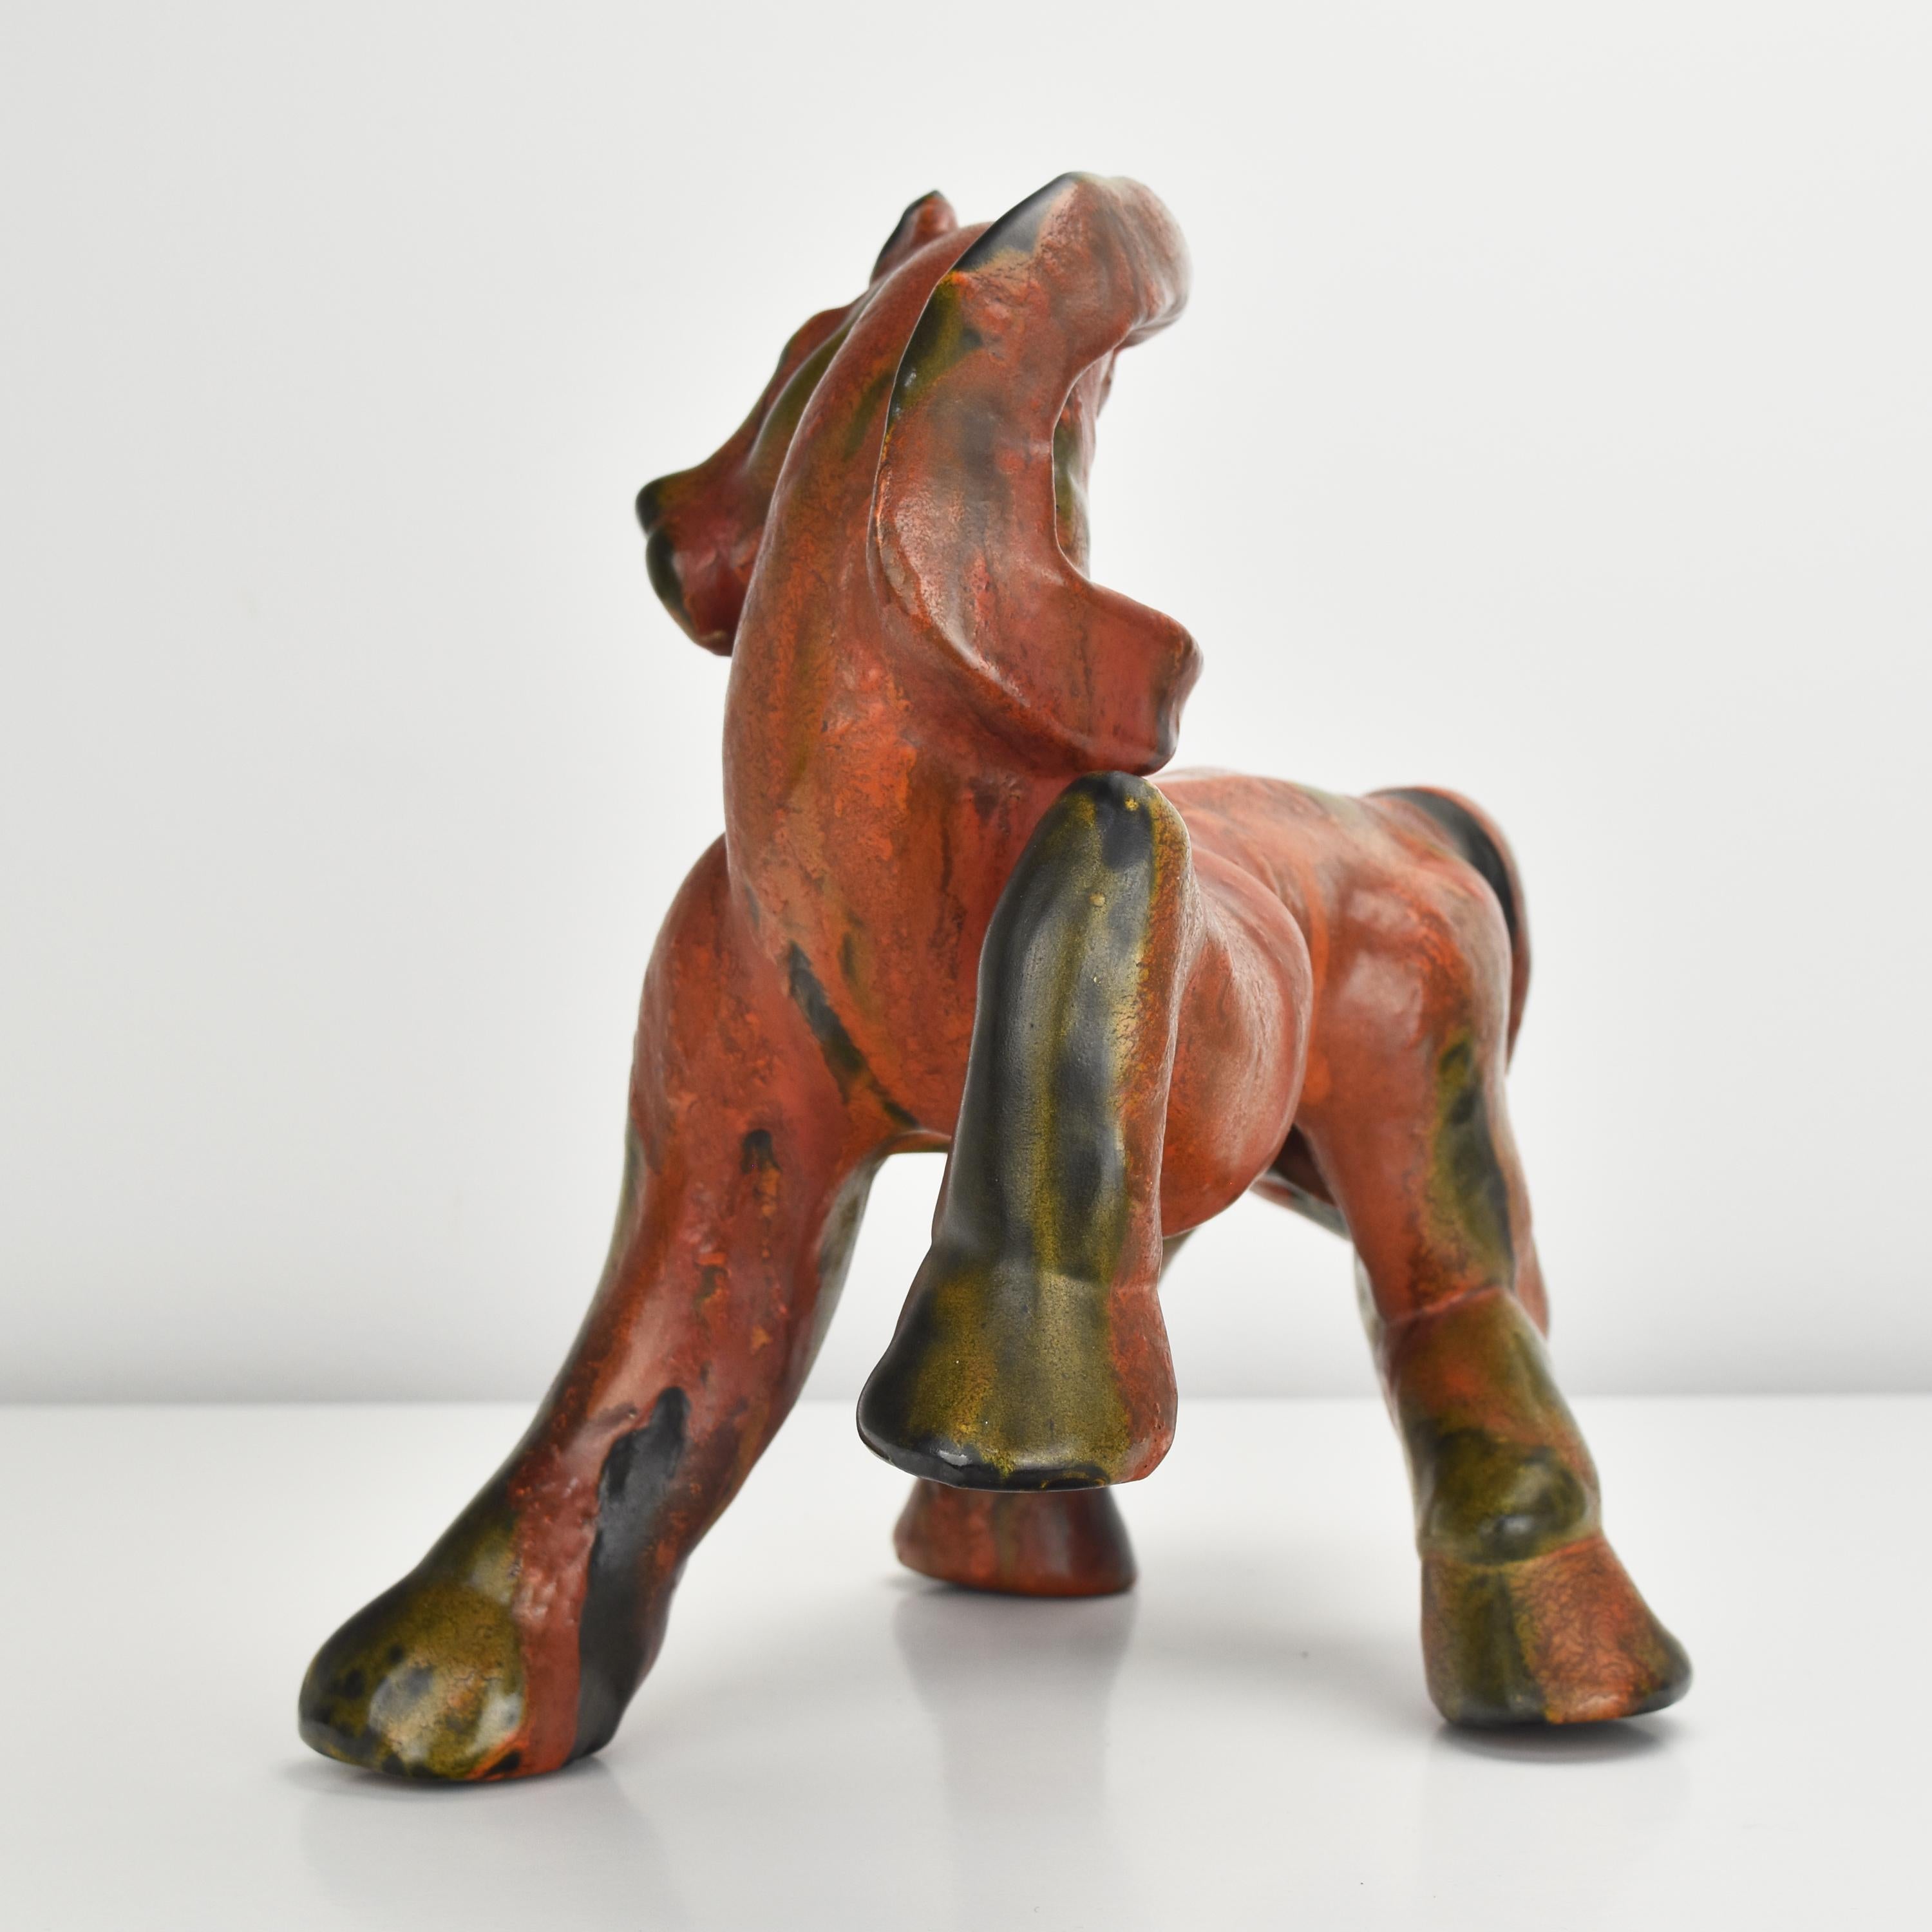 German Art Deco Pottery Ceramic Horse Sculpture Figurine After Franz Marc In Excellent Condition For Sale In Bad Säckingen, DE